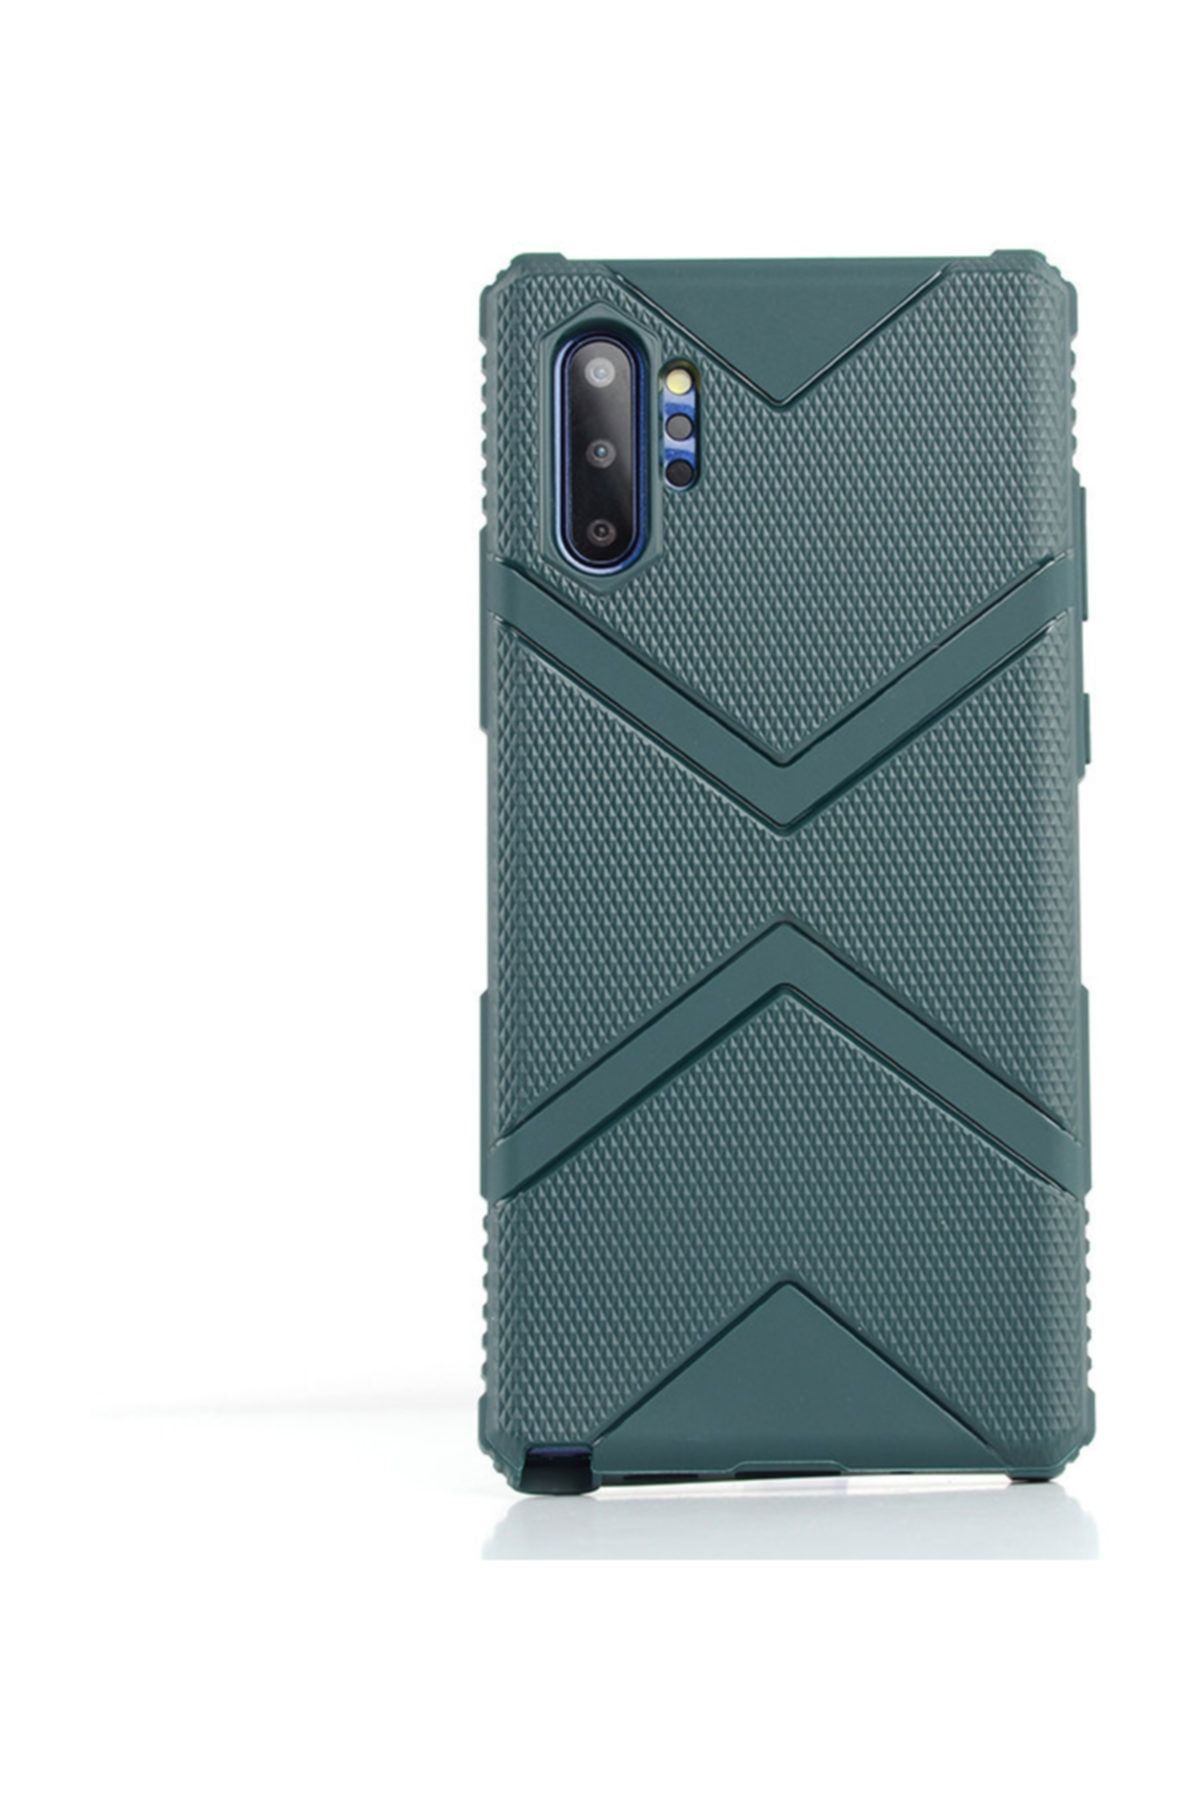 KNY Samsung Galaxy Note 10 Plus Kılıf Ultra Koruma Karbon Desenli Antishock Hank Silikon